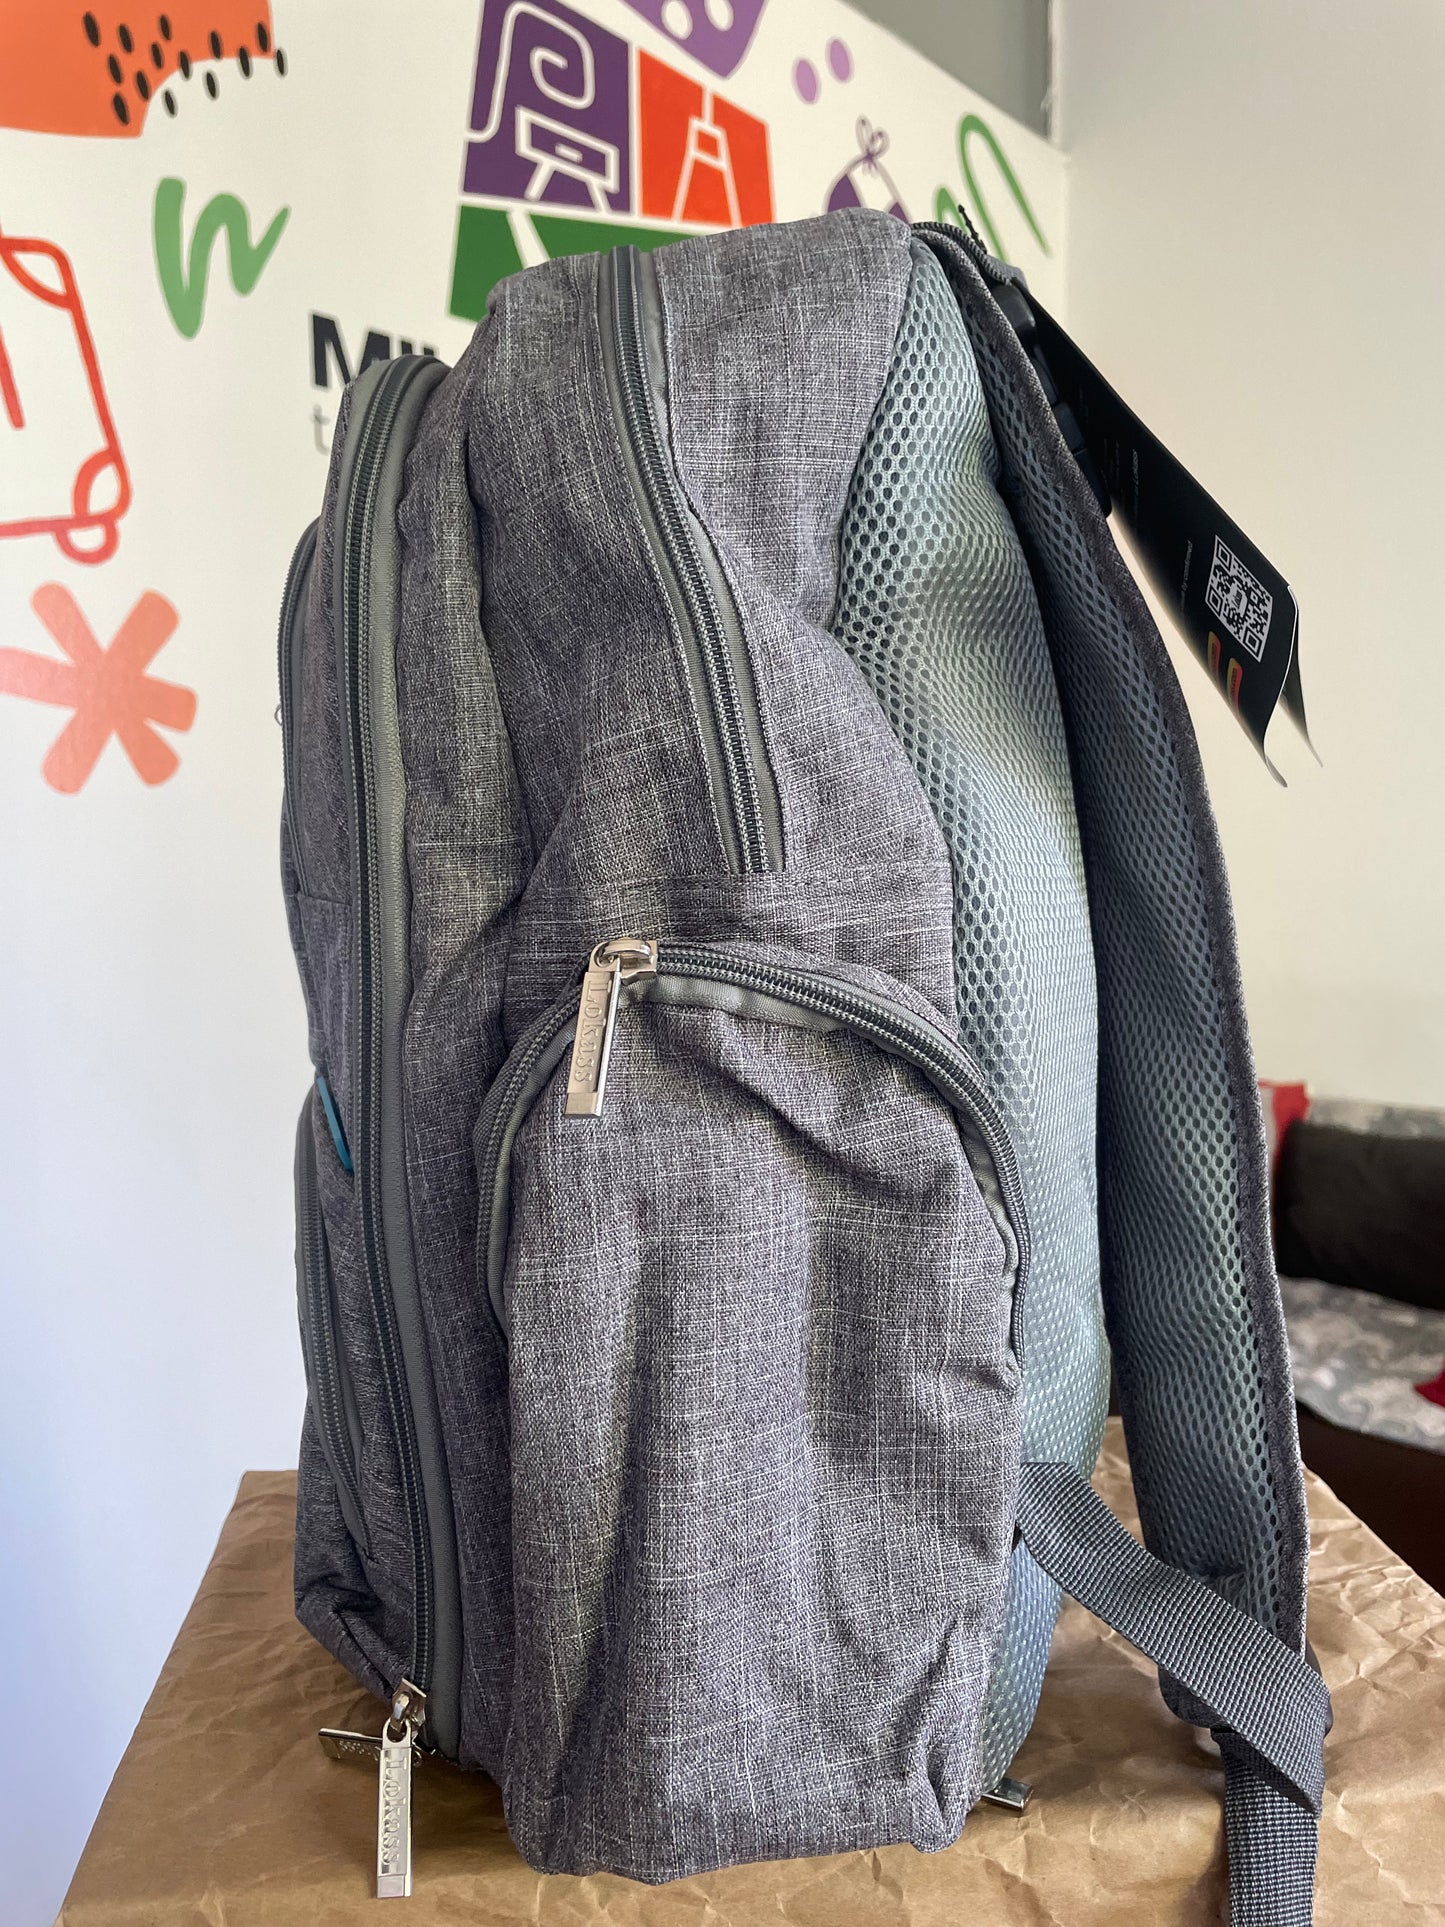 Pañalera tipo mochila 
Incluye aulado y bolsa con clip para pacha , compartimos laterales tipo lonchera para mantener caliente o fria